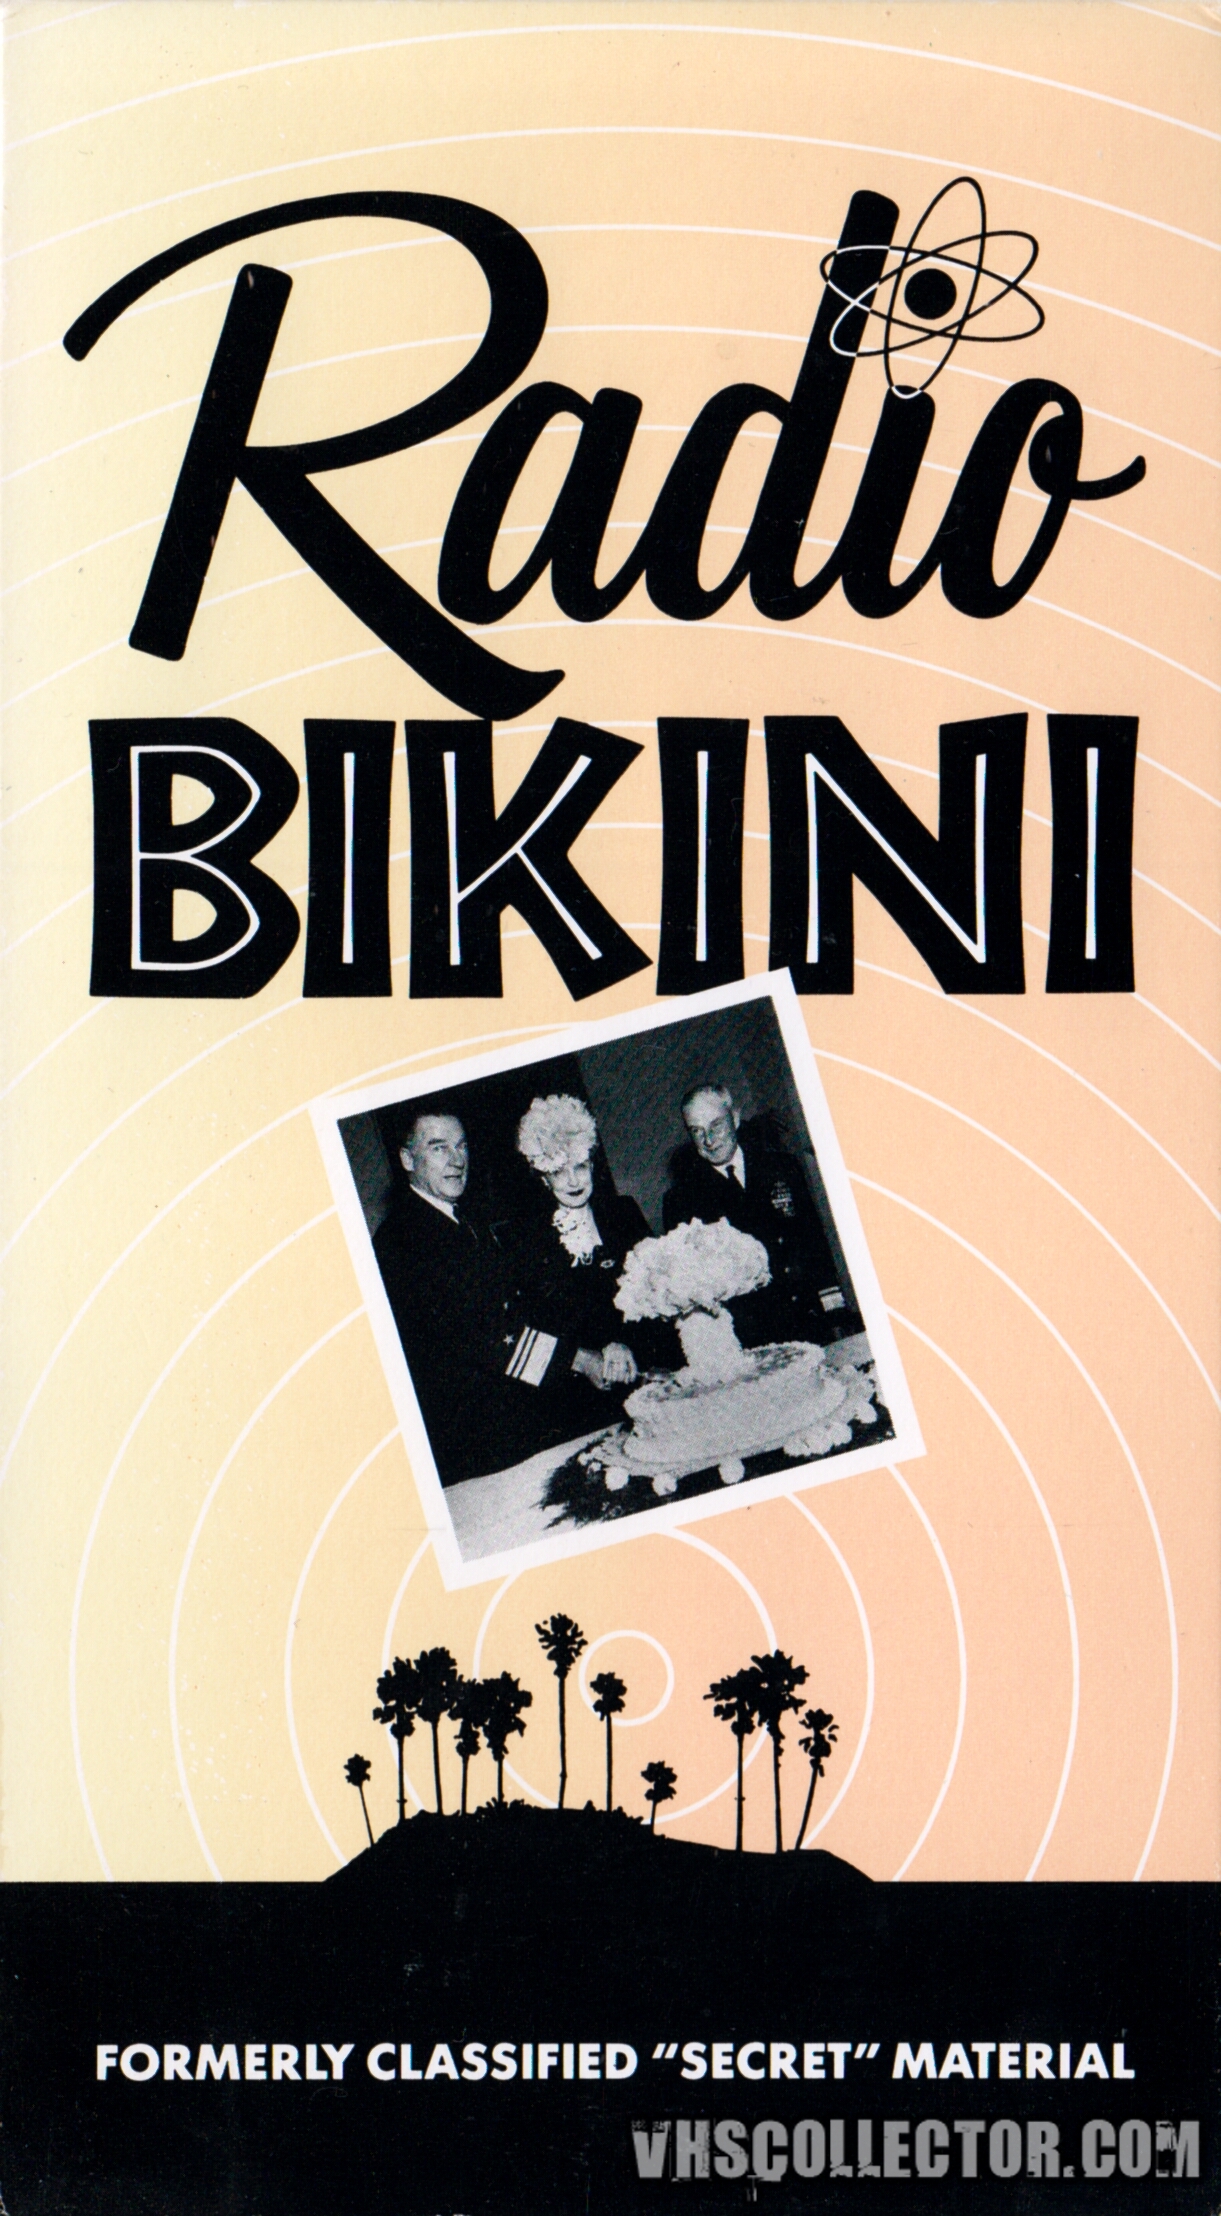 Radio Bikini | VHSCollector.com